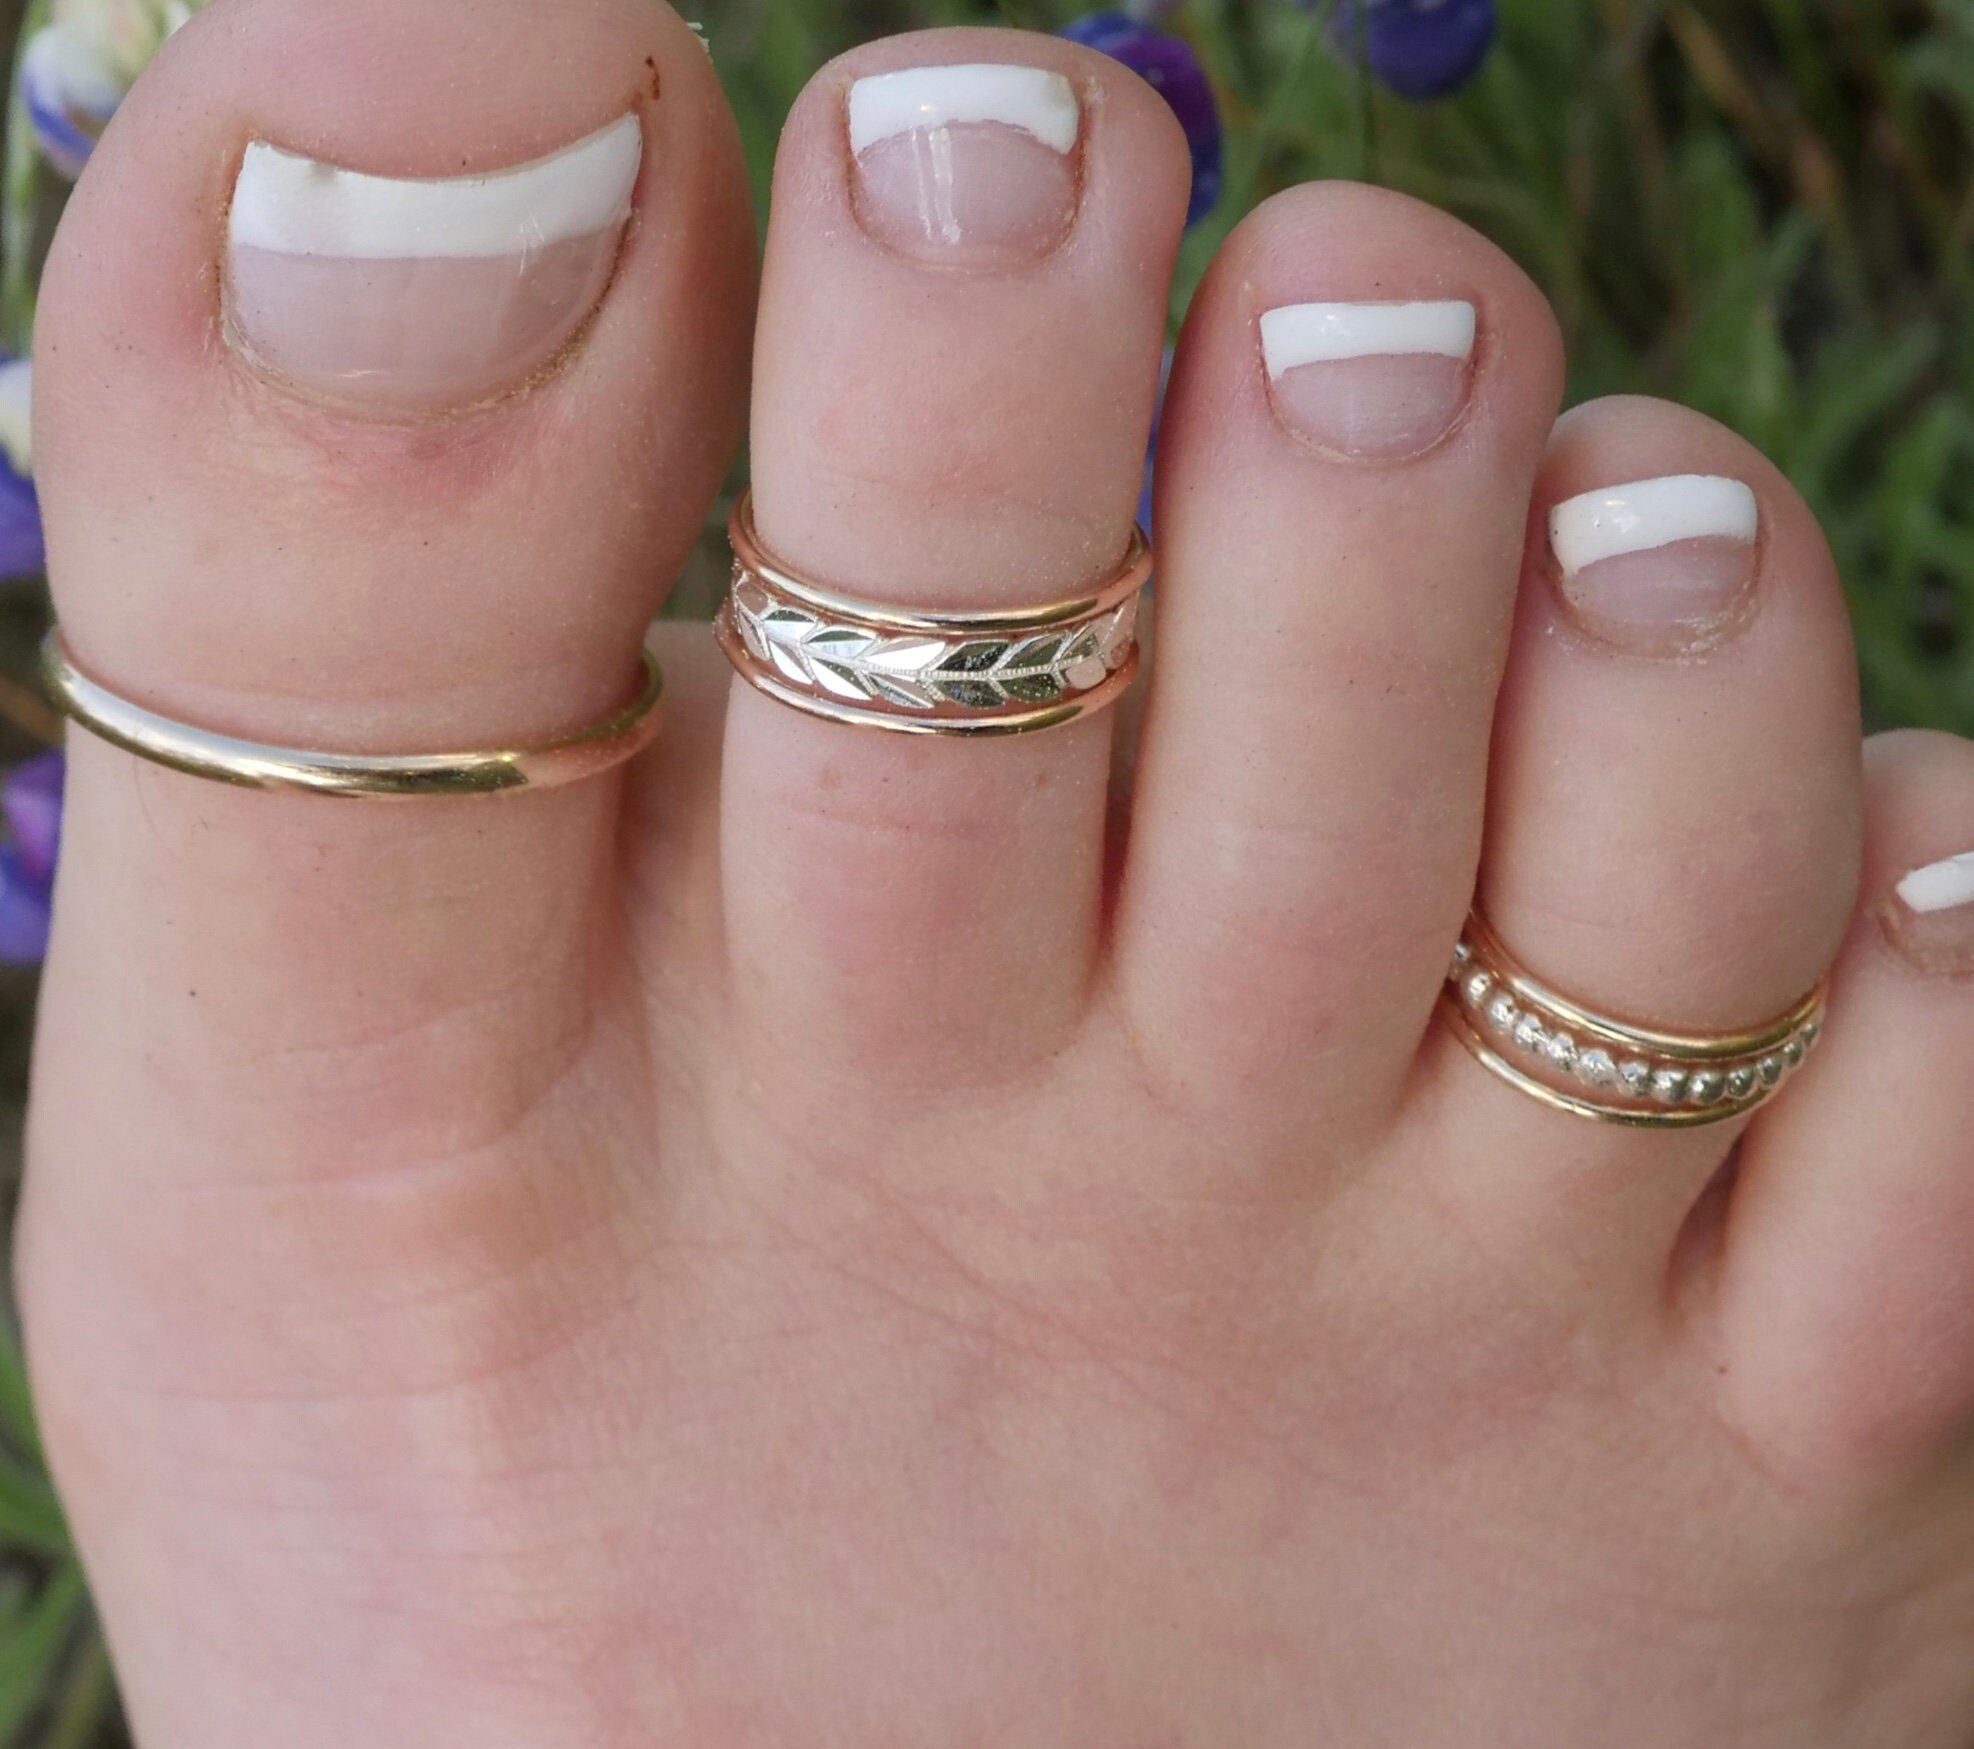 Artisan Toe rings adjustable sterling silver handmade at ₹2950 | Azilaa